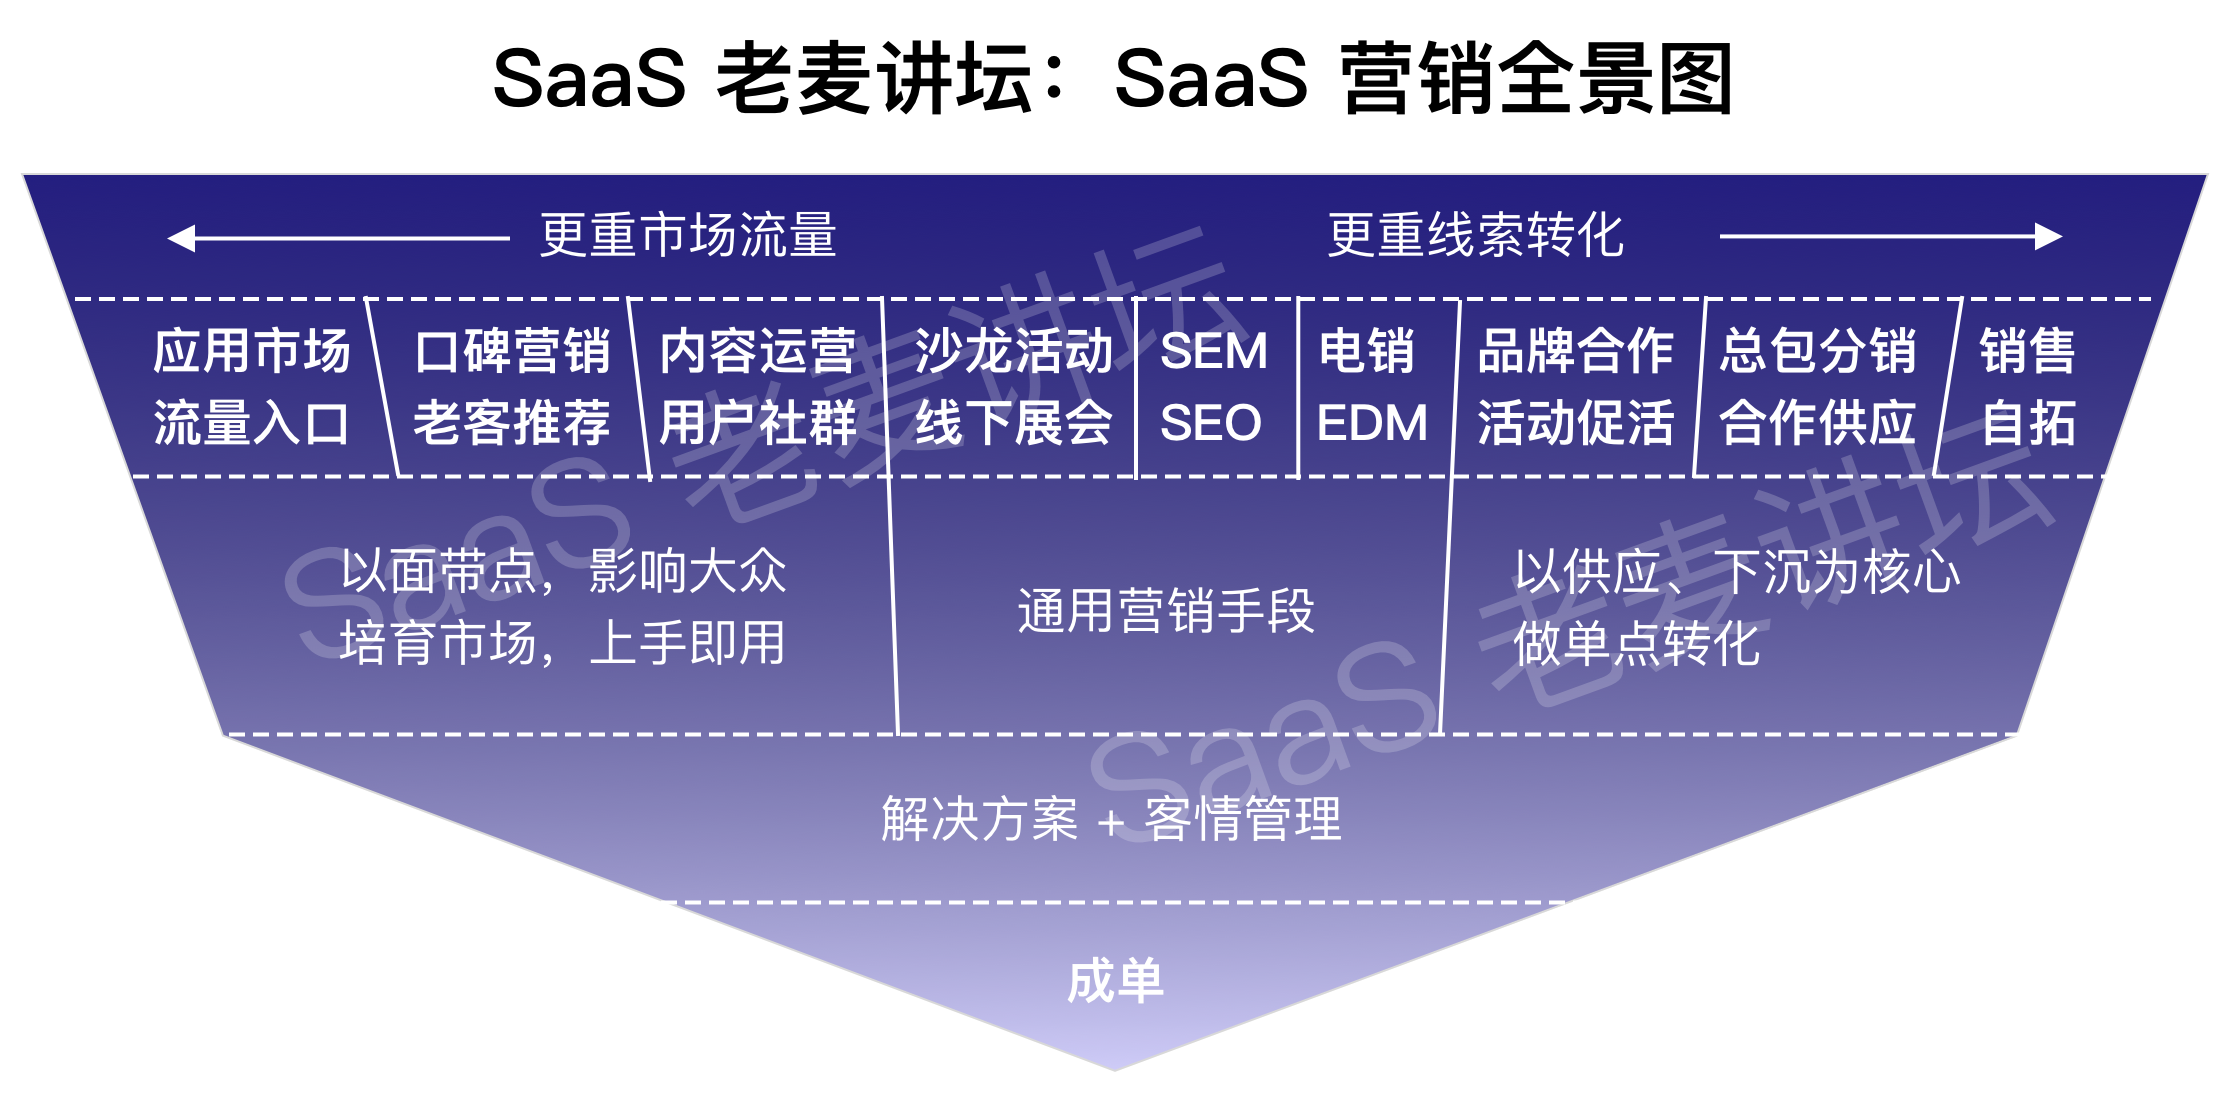 SaaS 营销模式架构全景图